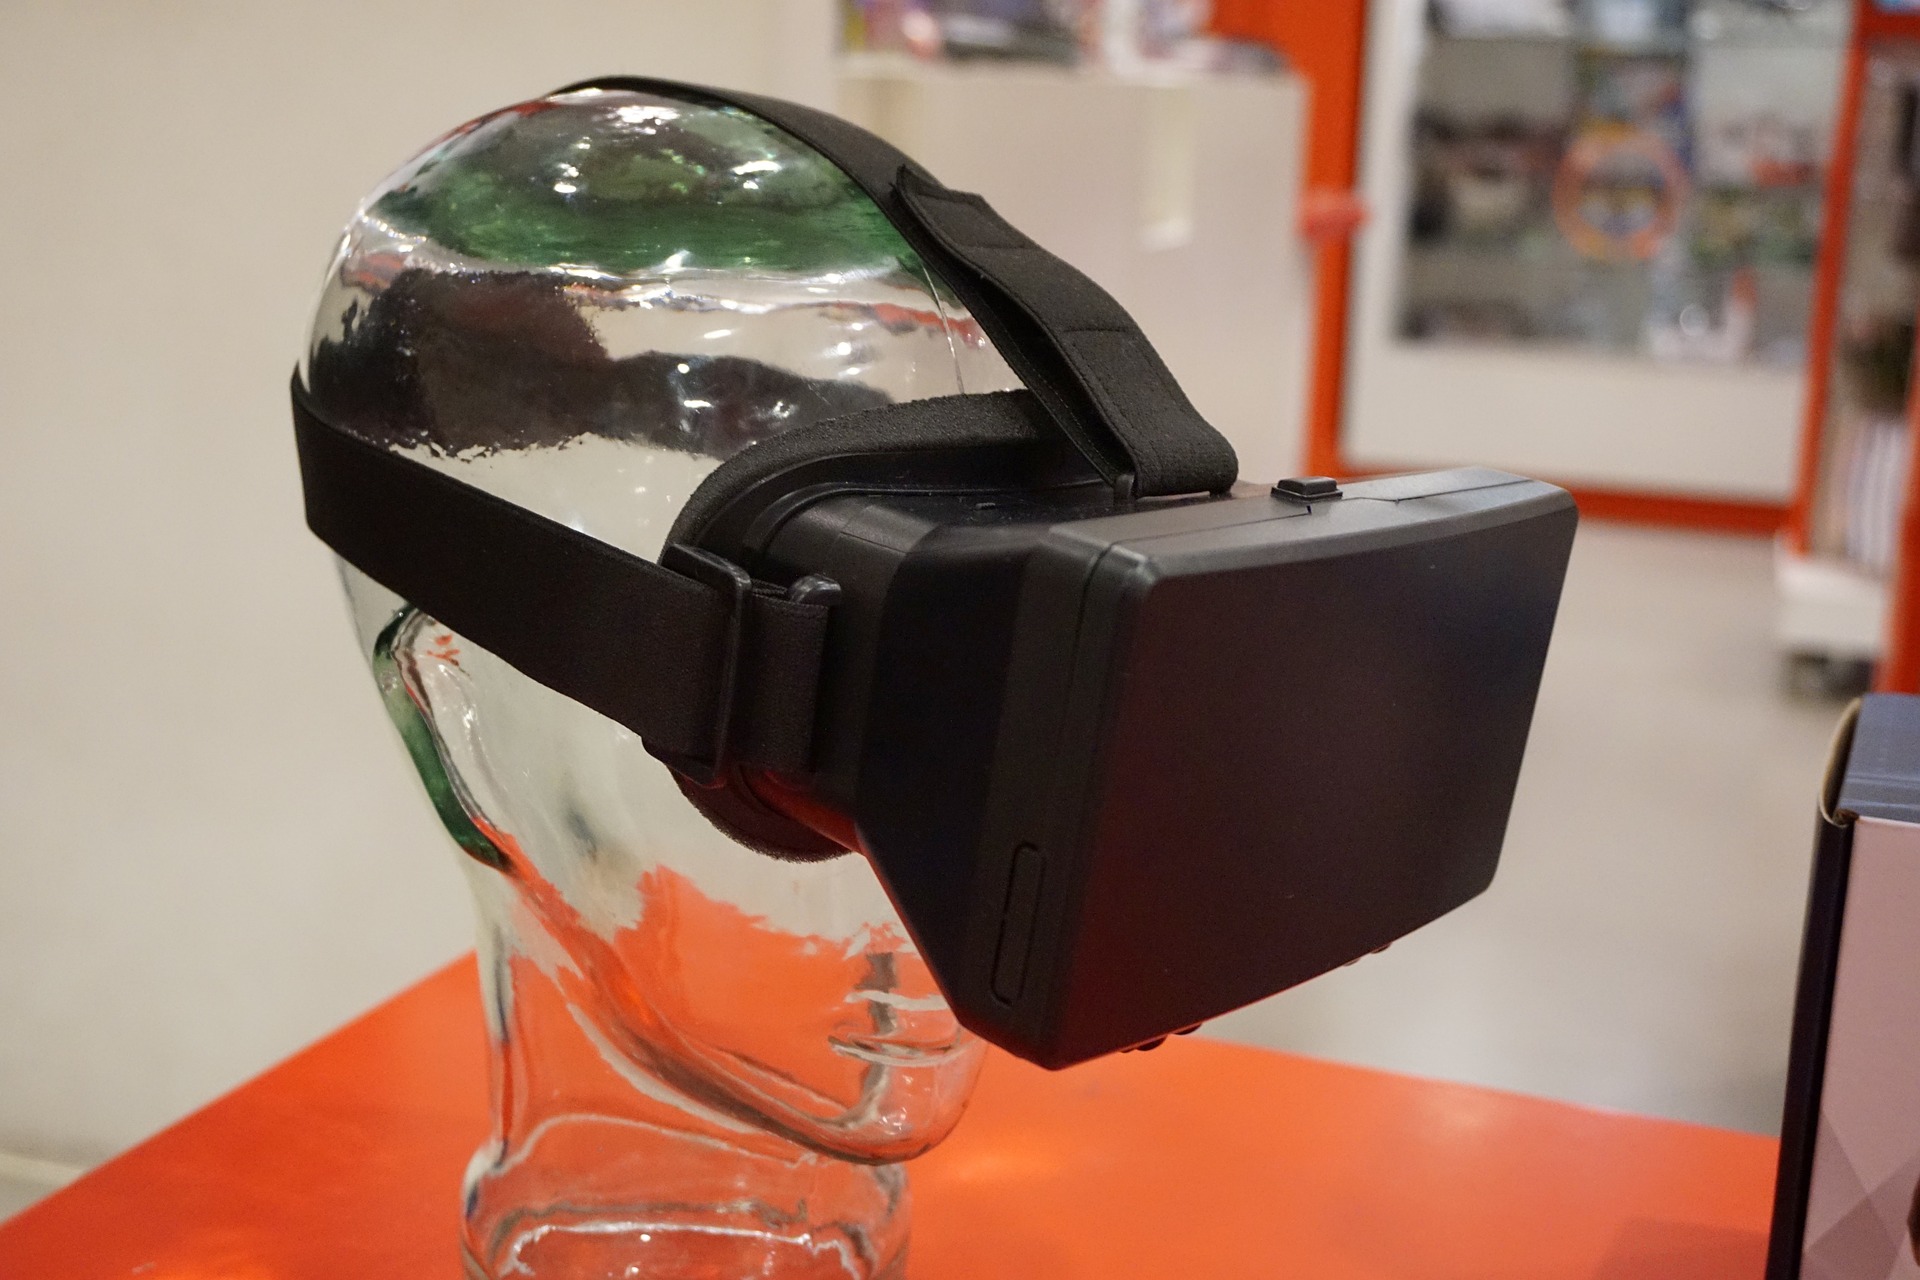 image of oculus VR headset